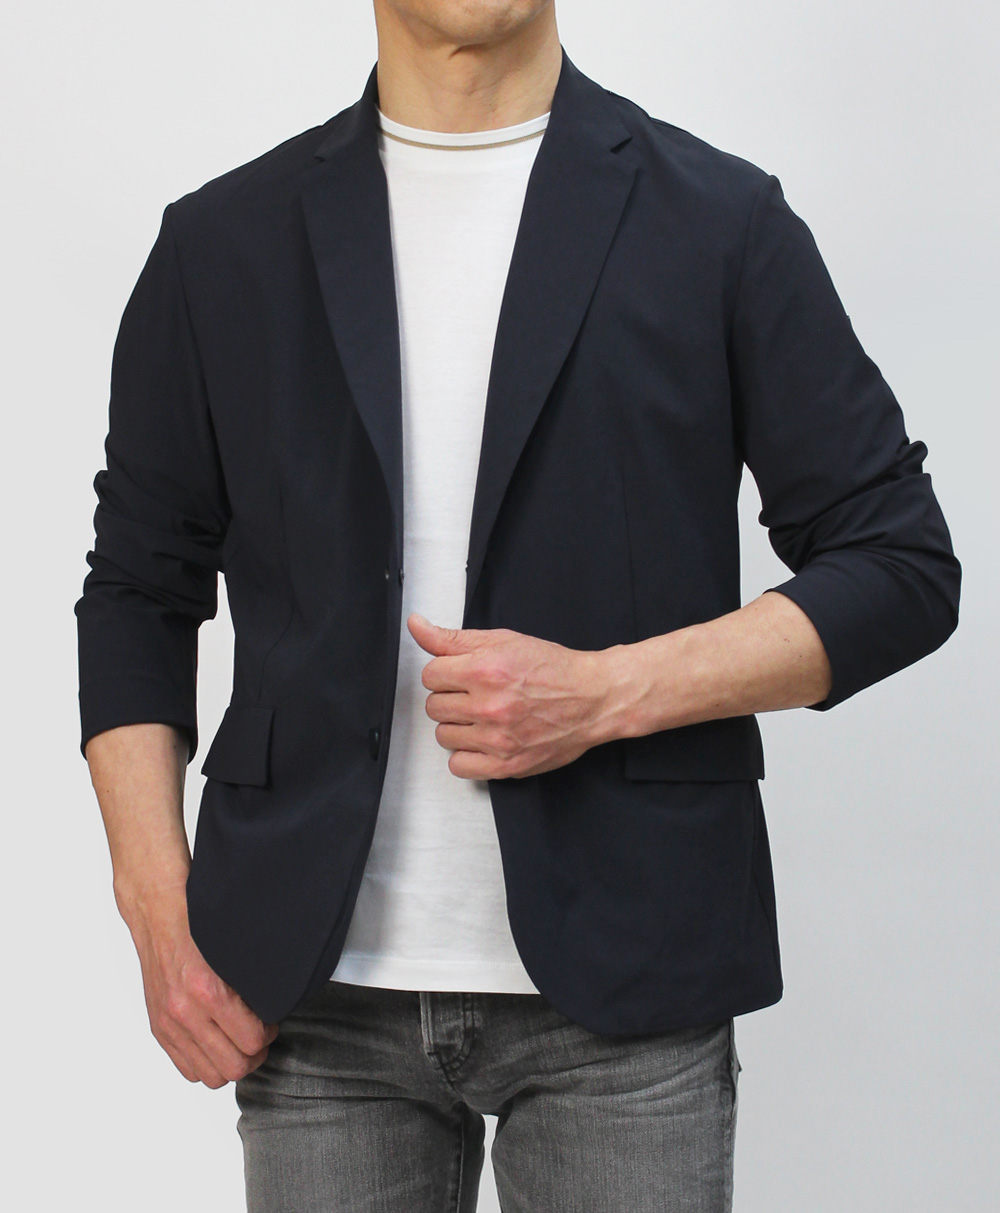 daboro(ダボロ)】linen jacket ジャケット(DJK008) 買取安い店